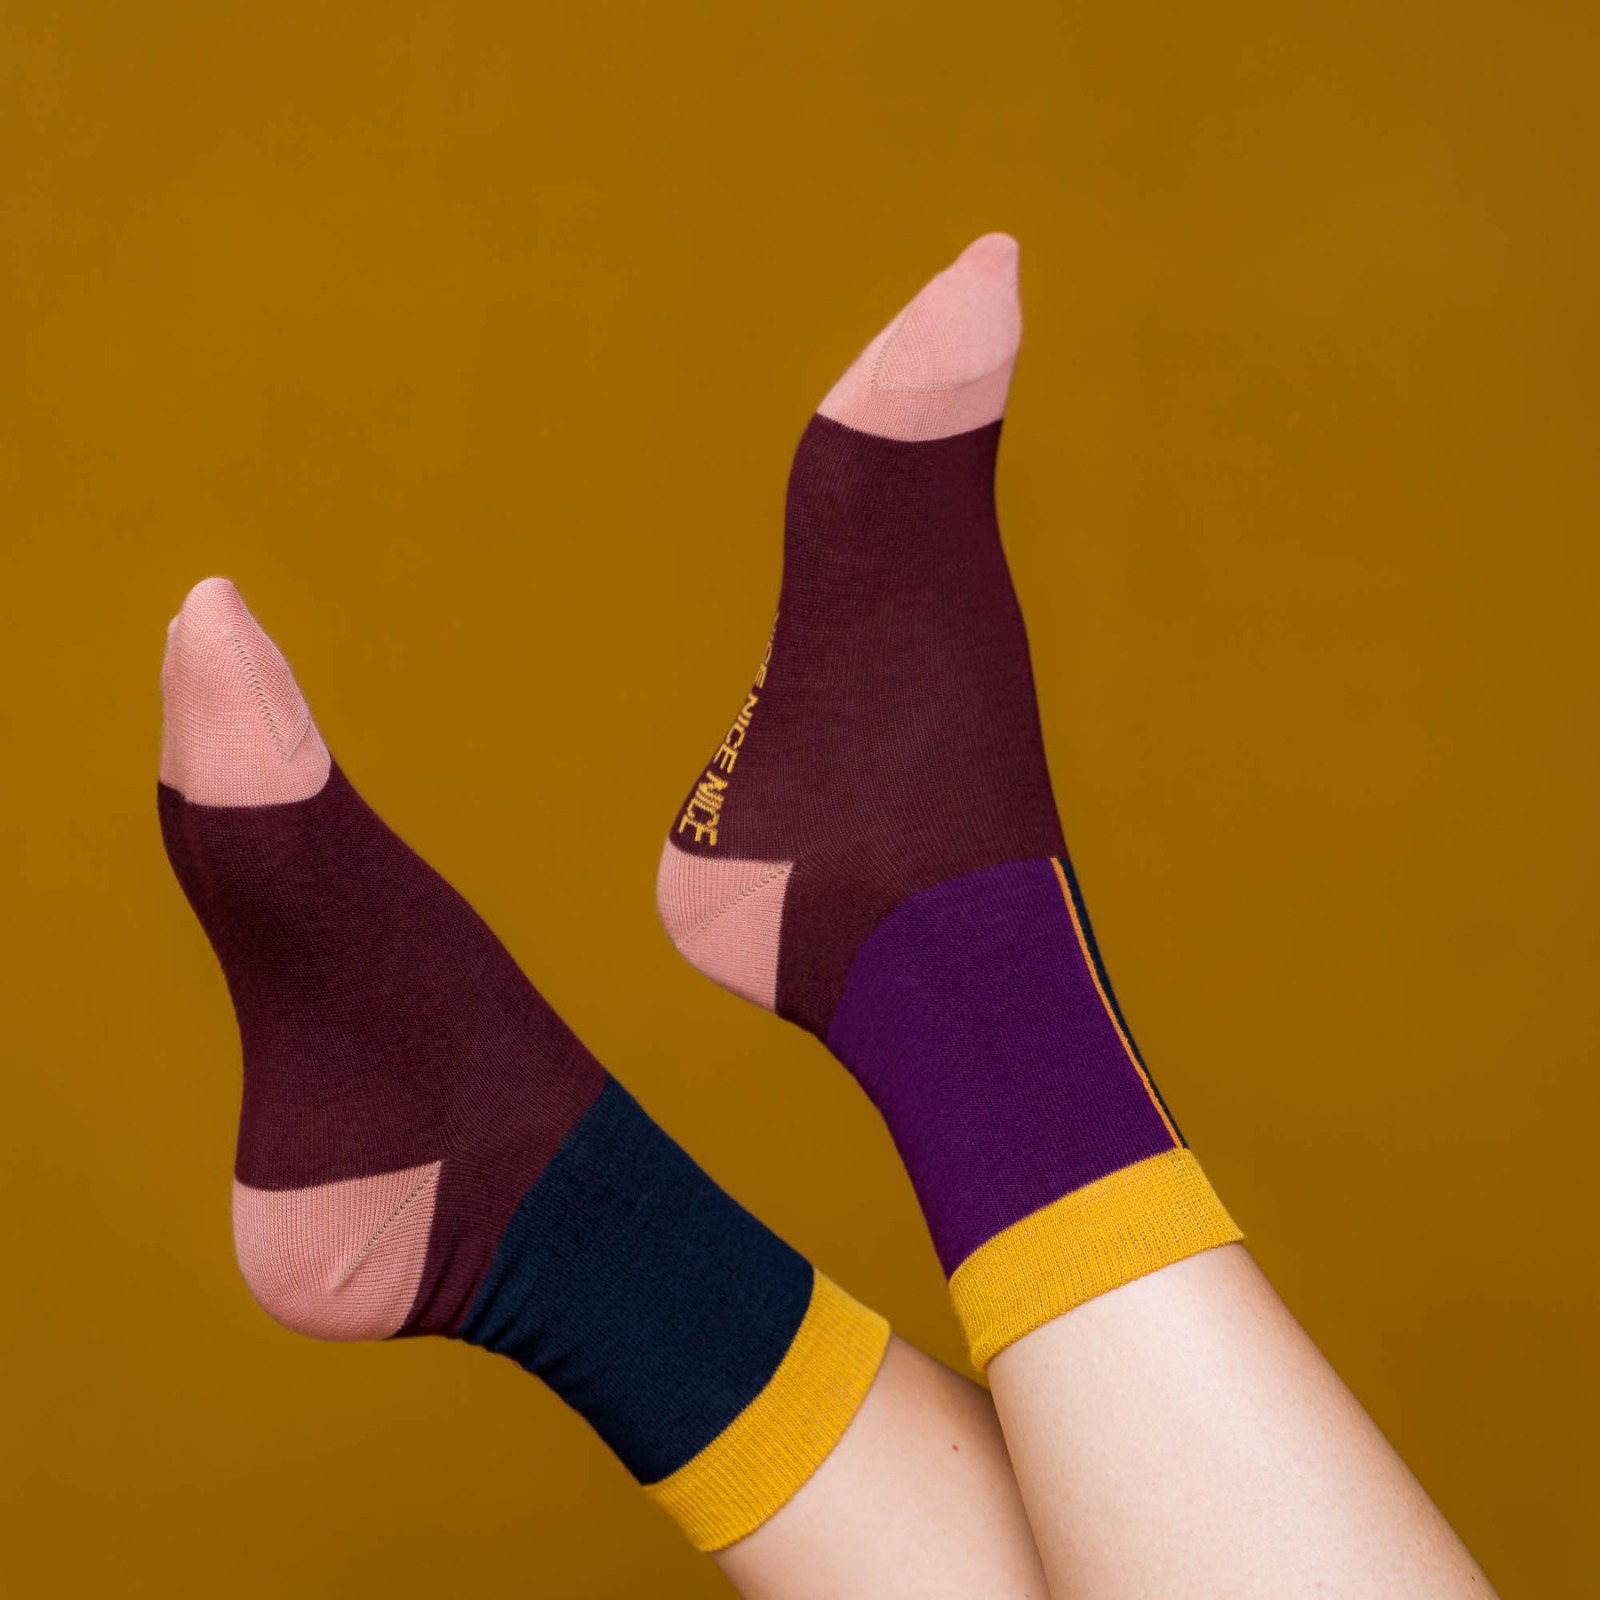 nicenicenice - nice socks half color aubergine